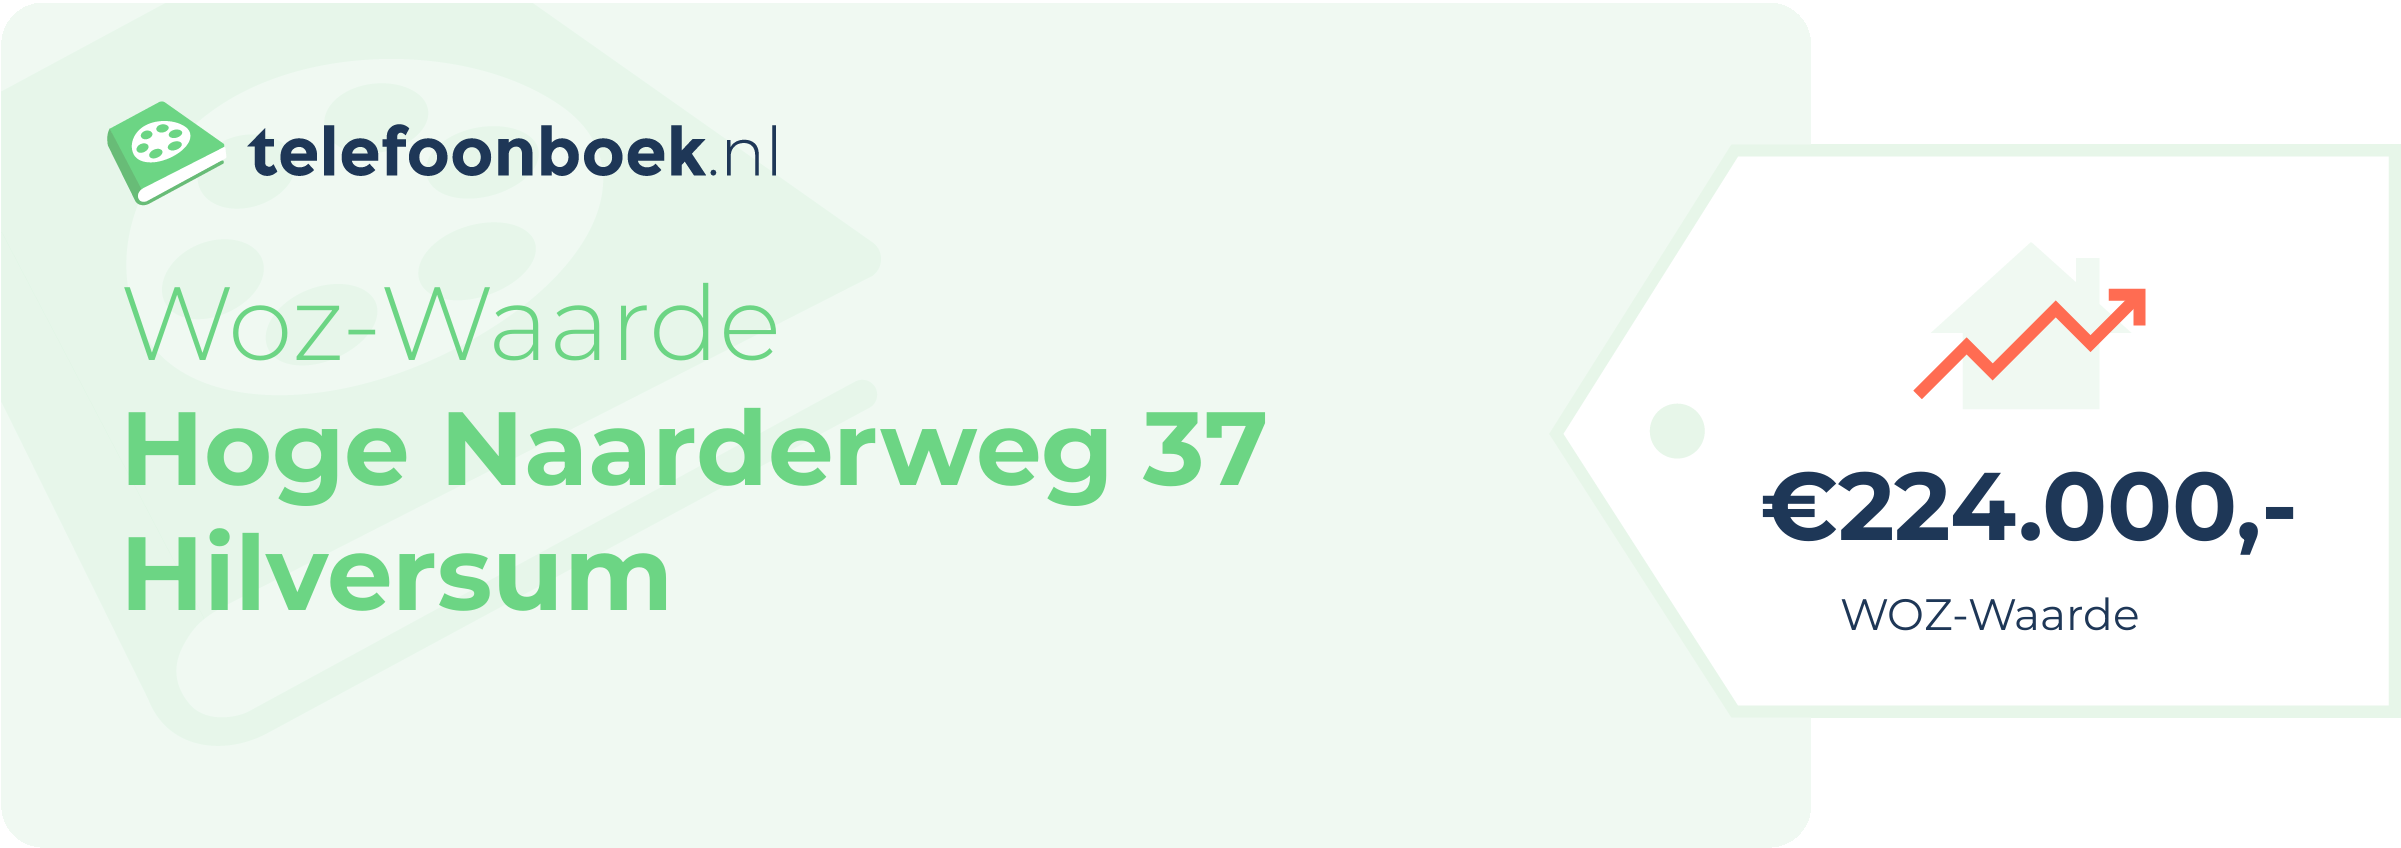 WOZ-waarde Hoge Naarderweg 37 Hilversum